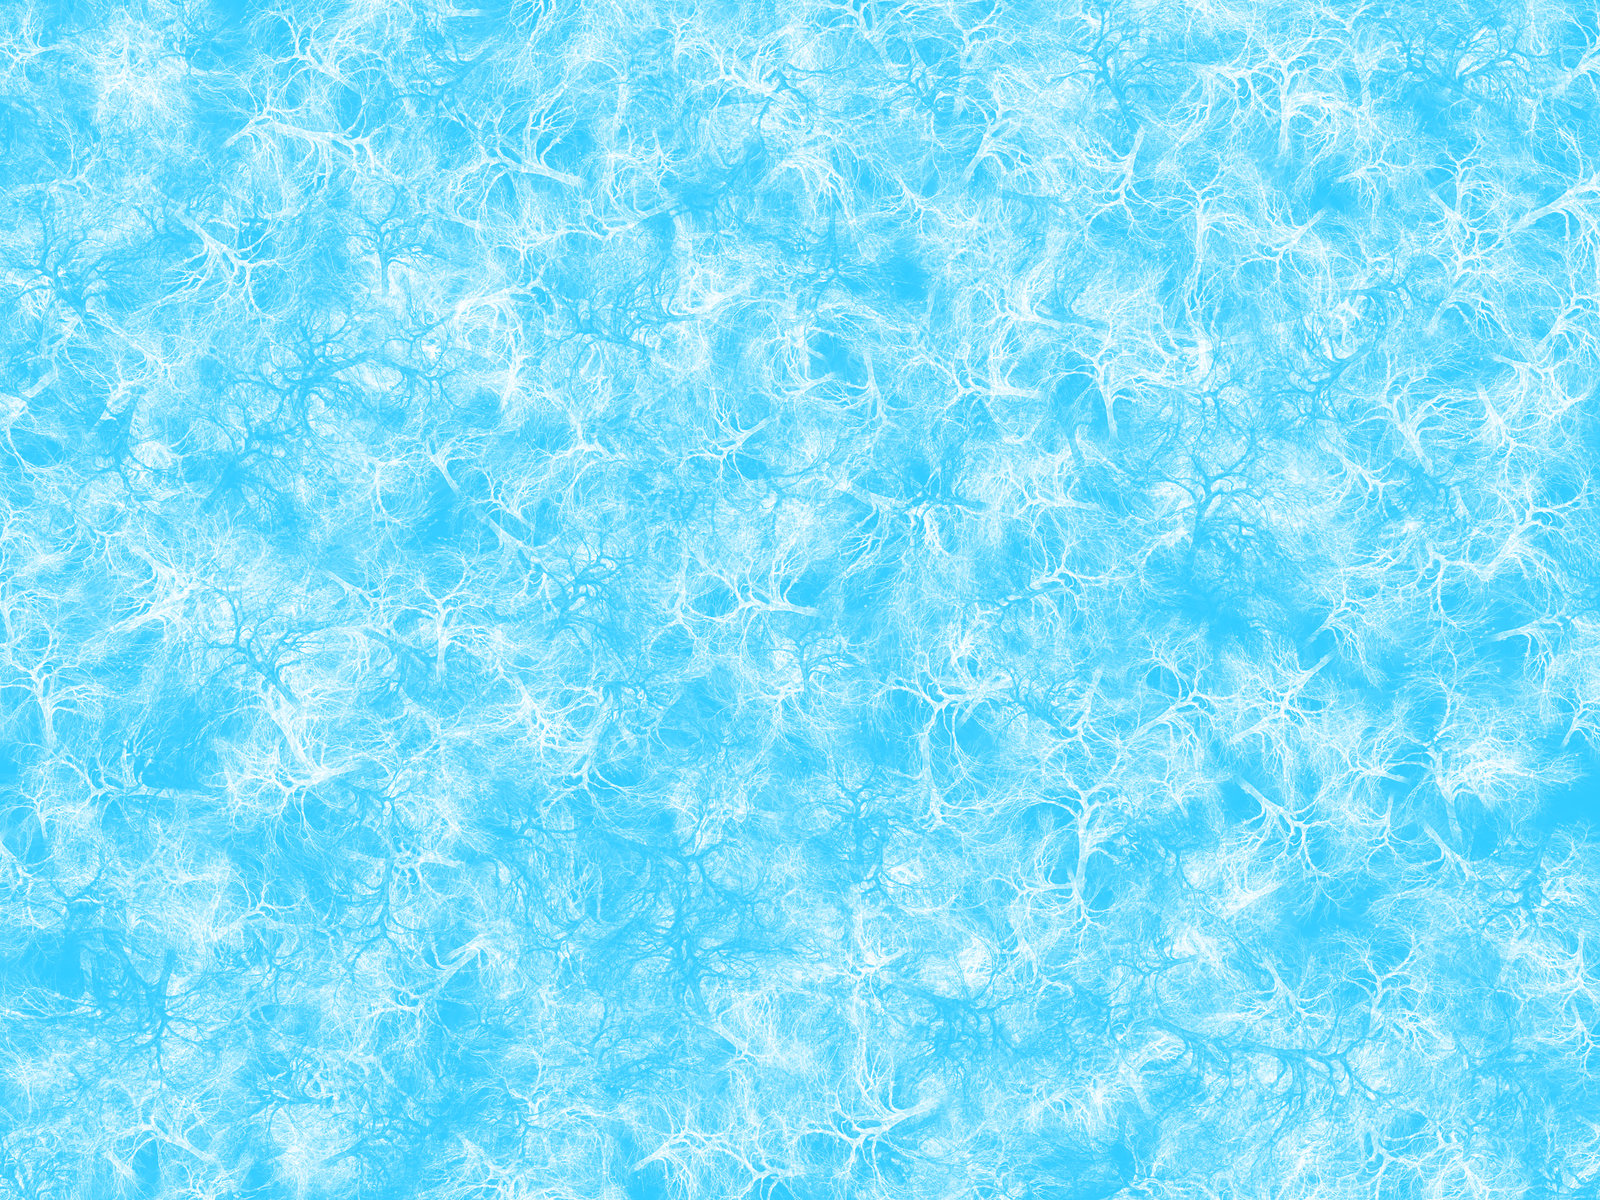 Aesthetic Blue Plain Background Tumblr Largest Wallpaper Portal